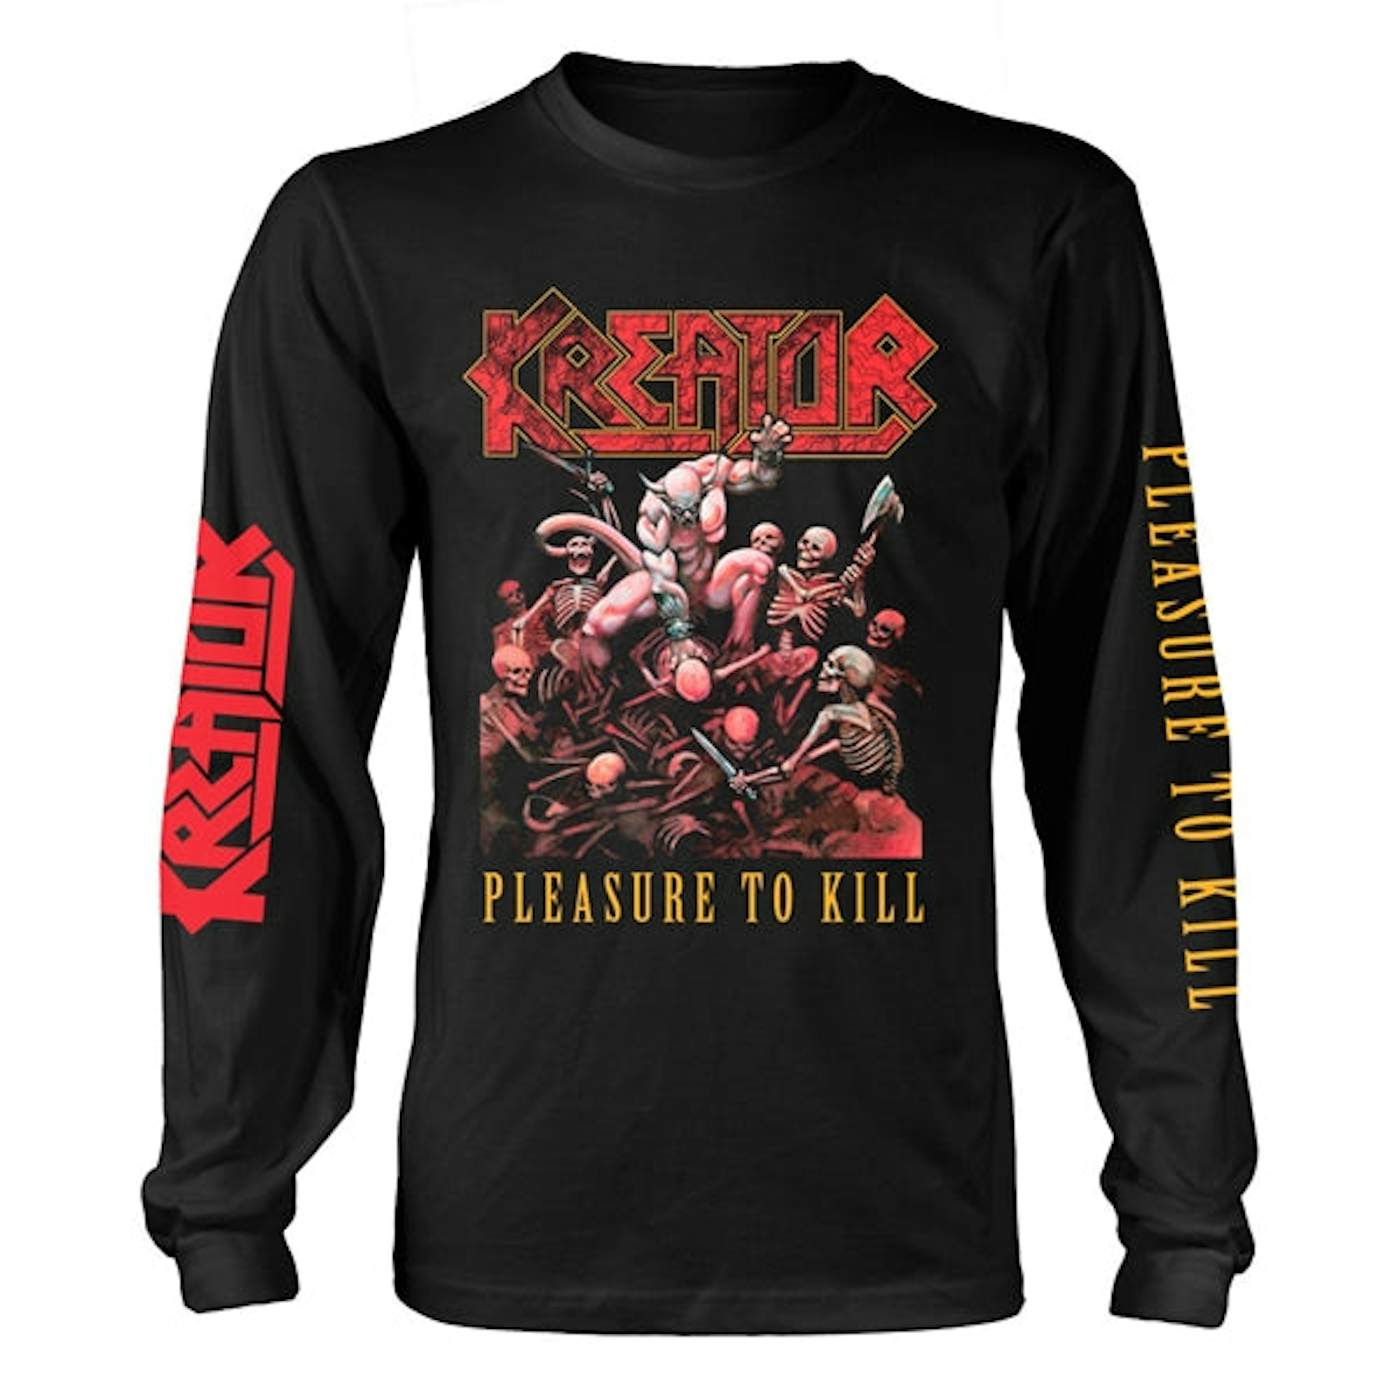 Kreator Long Sleeve T Shirt - Pleasure To Kill